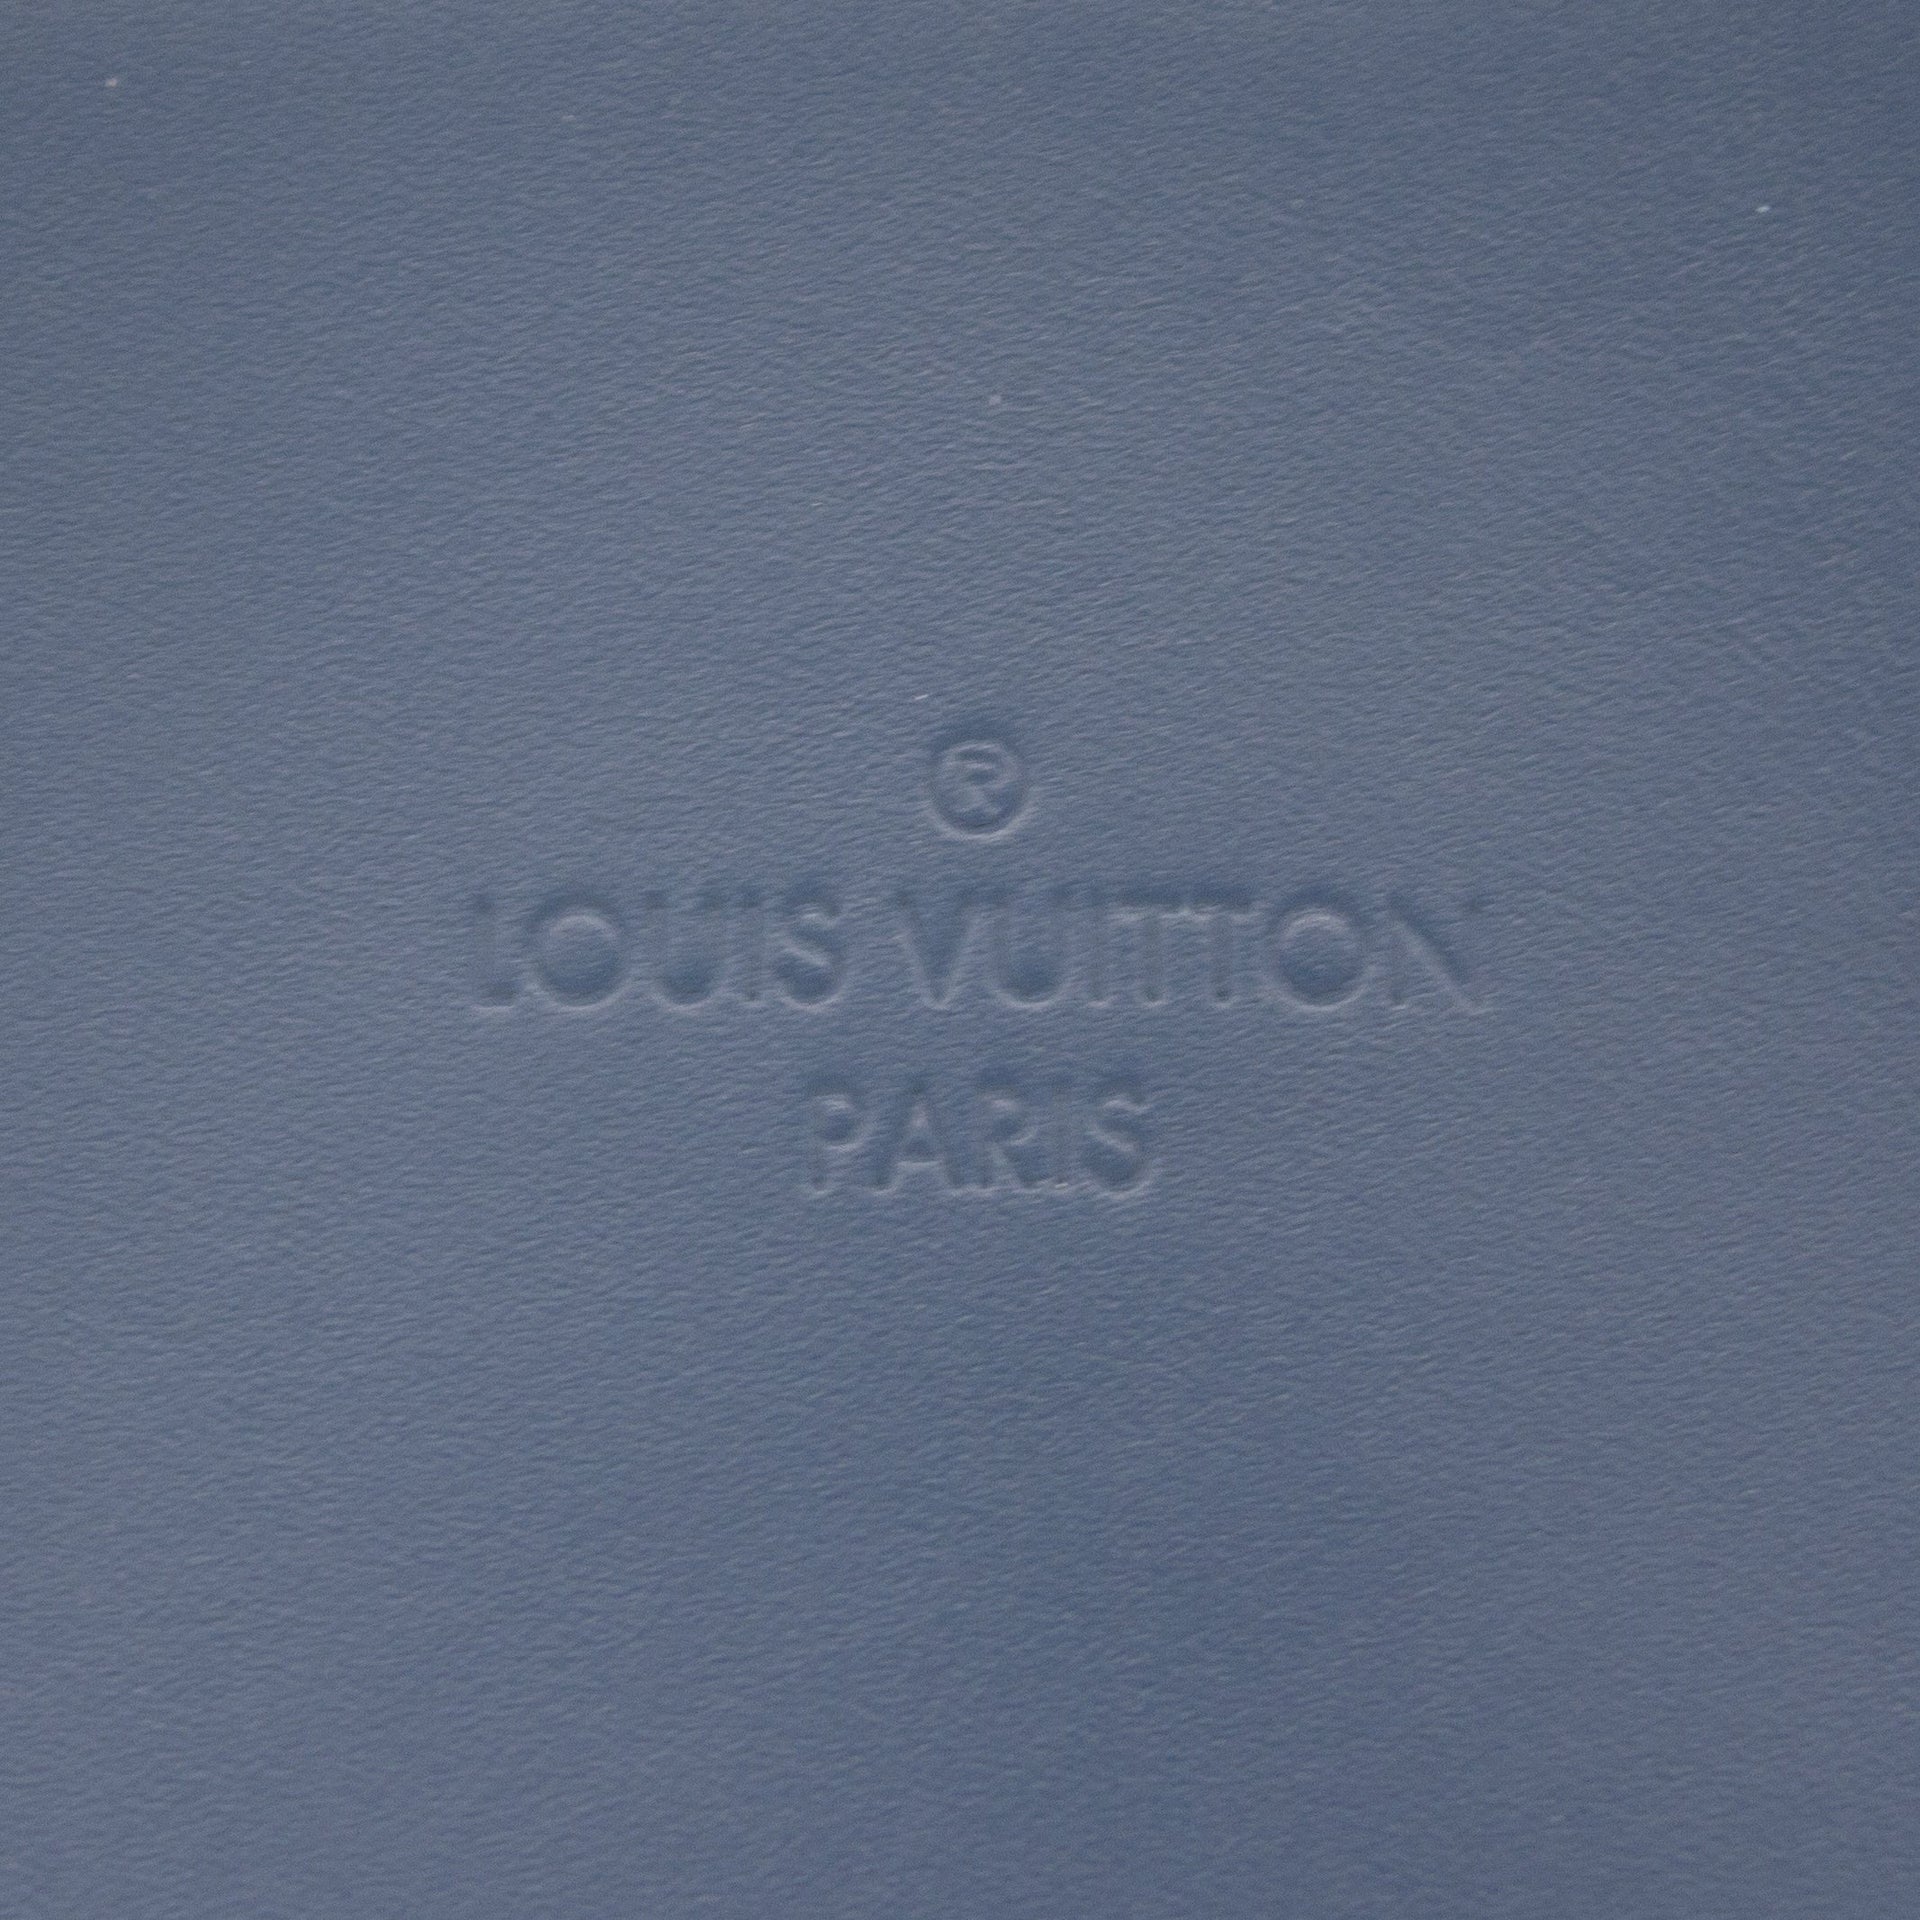 100+] Telefon Louis Vuitton Wallpaper